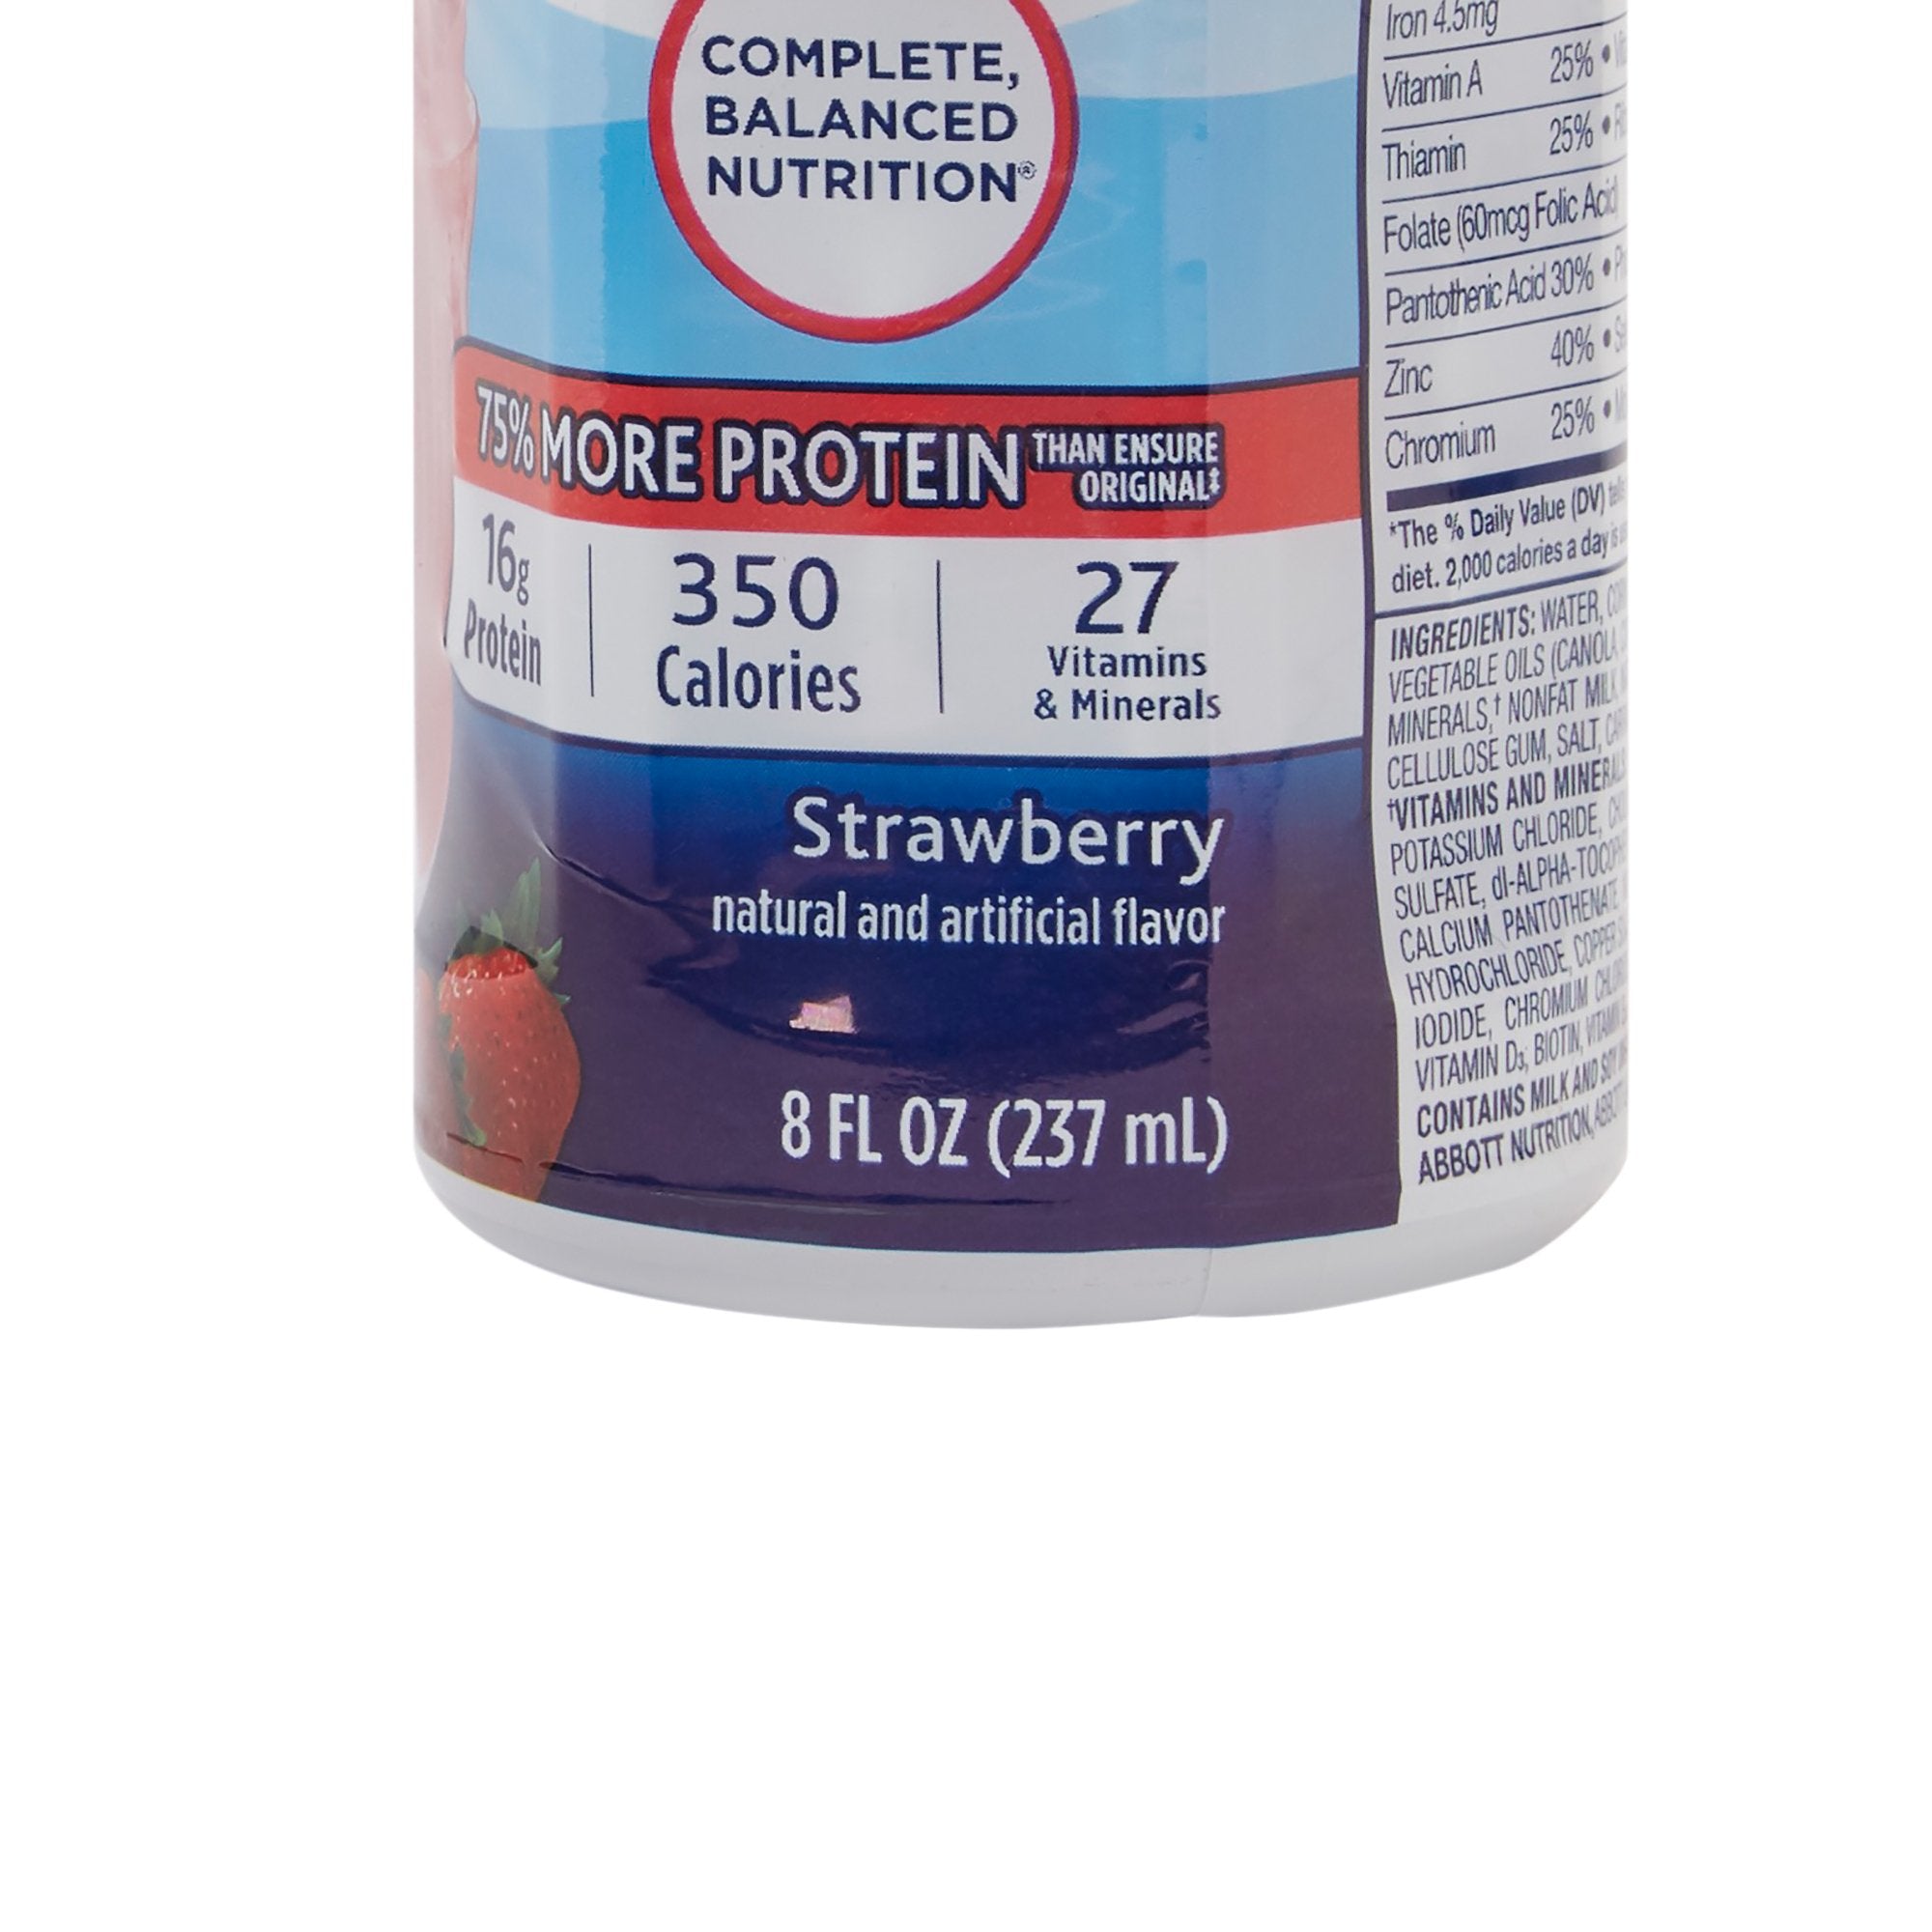 Oral Supplement Ensure Plus Nutrition Shake Strawberry Flavor Liquid 8 oz. Bottle